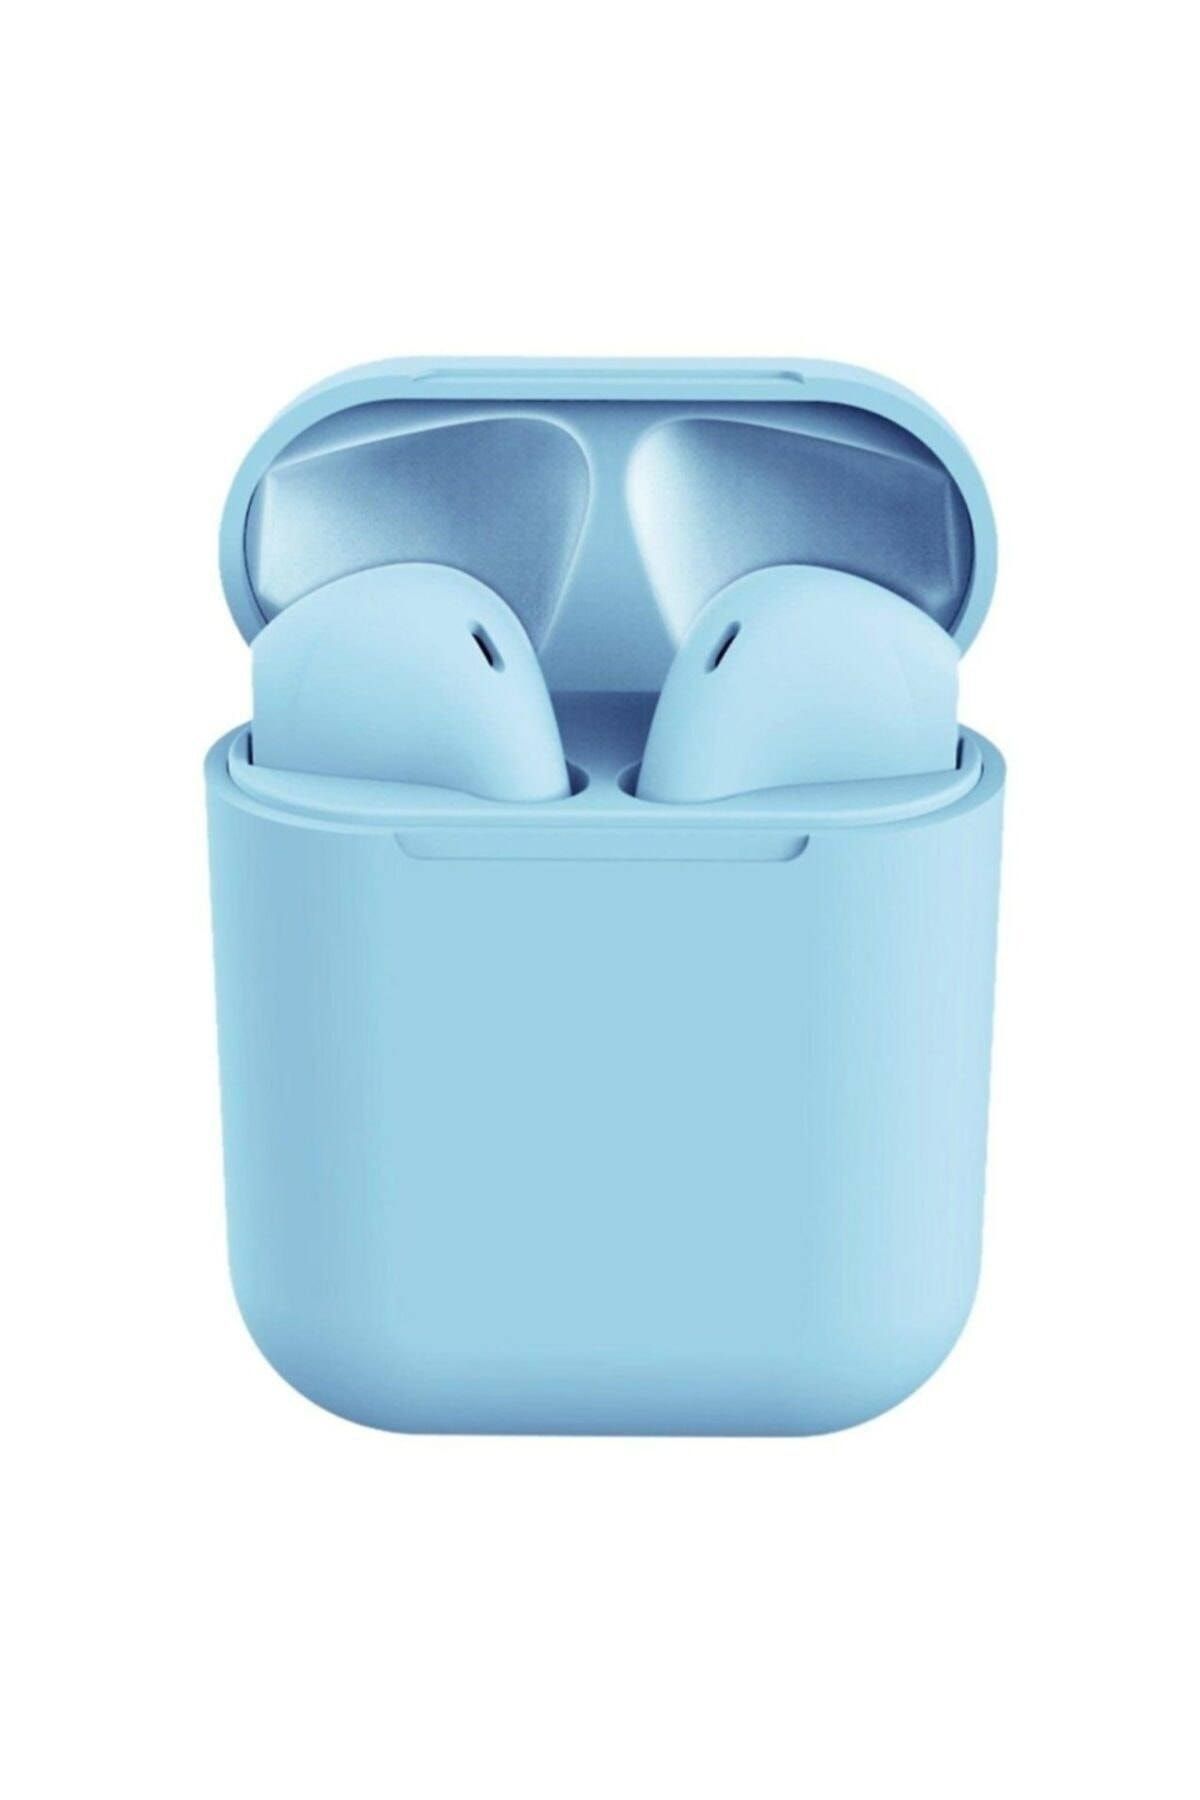 Concord Yeni Nesil Bluetooth Kulak Içi Kulaklık 5.1 Ap2+ Popup